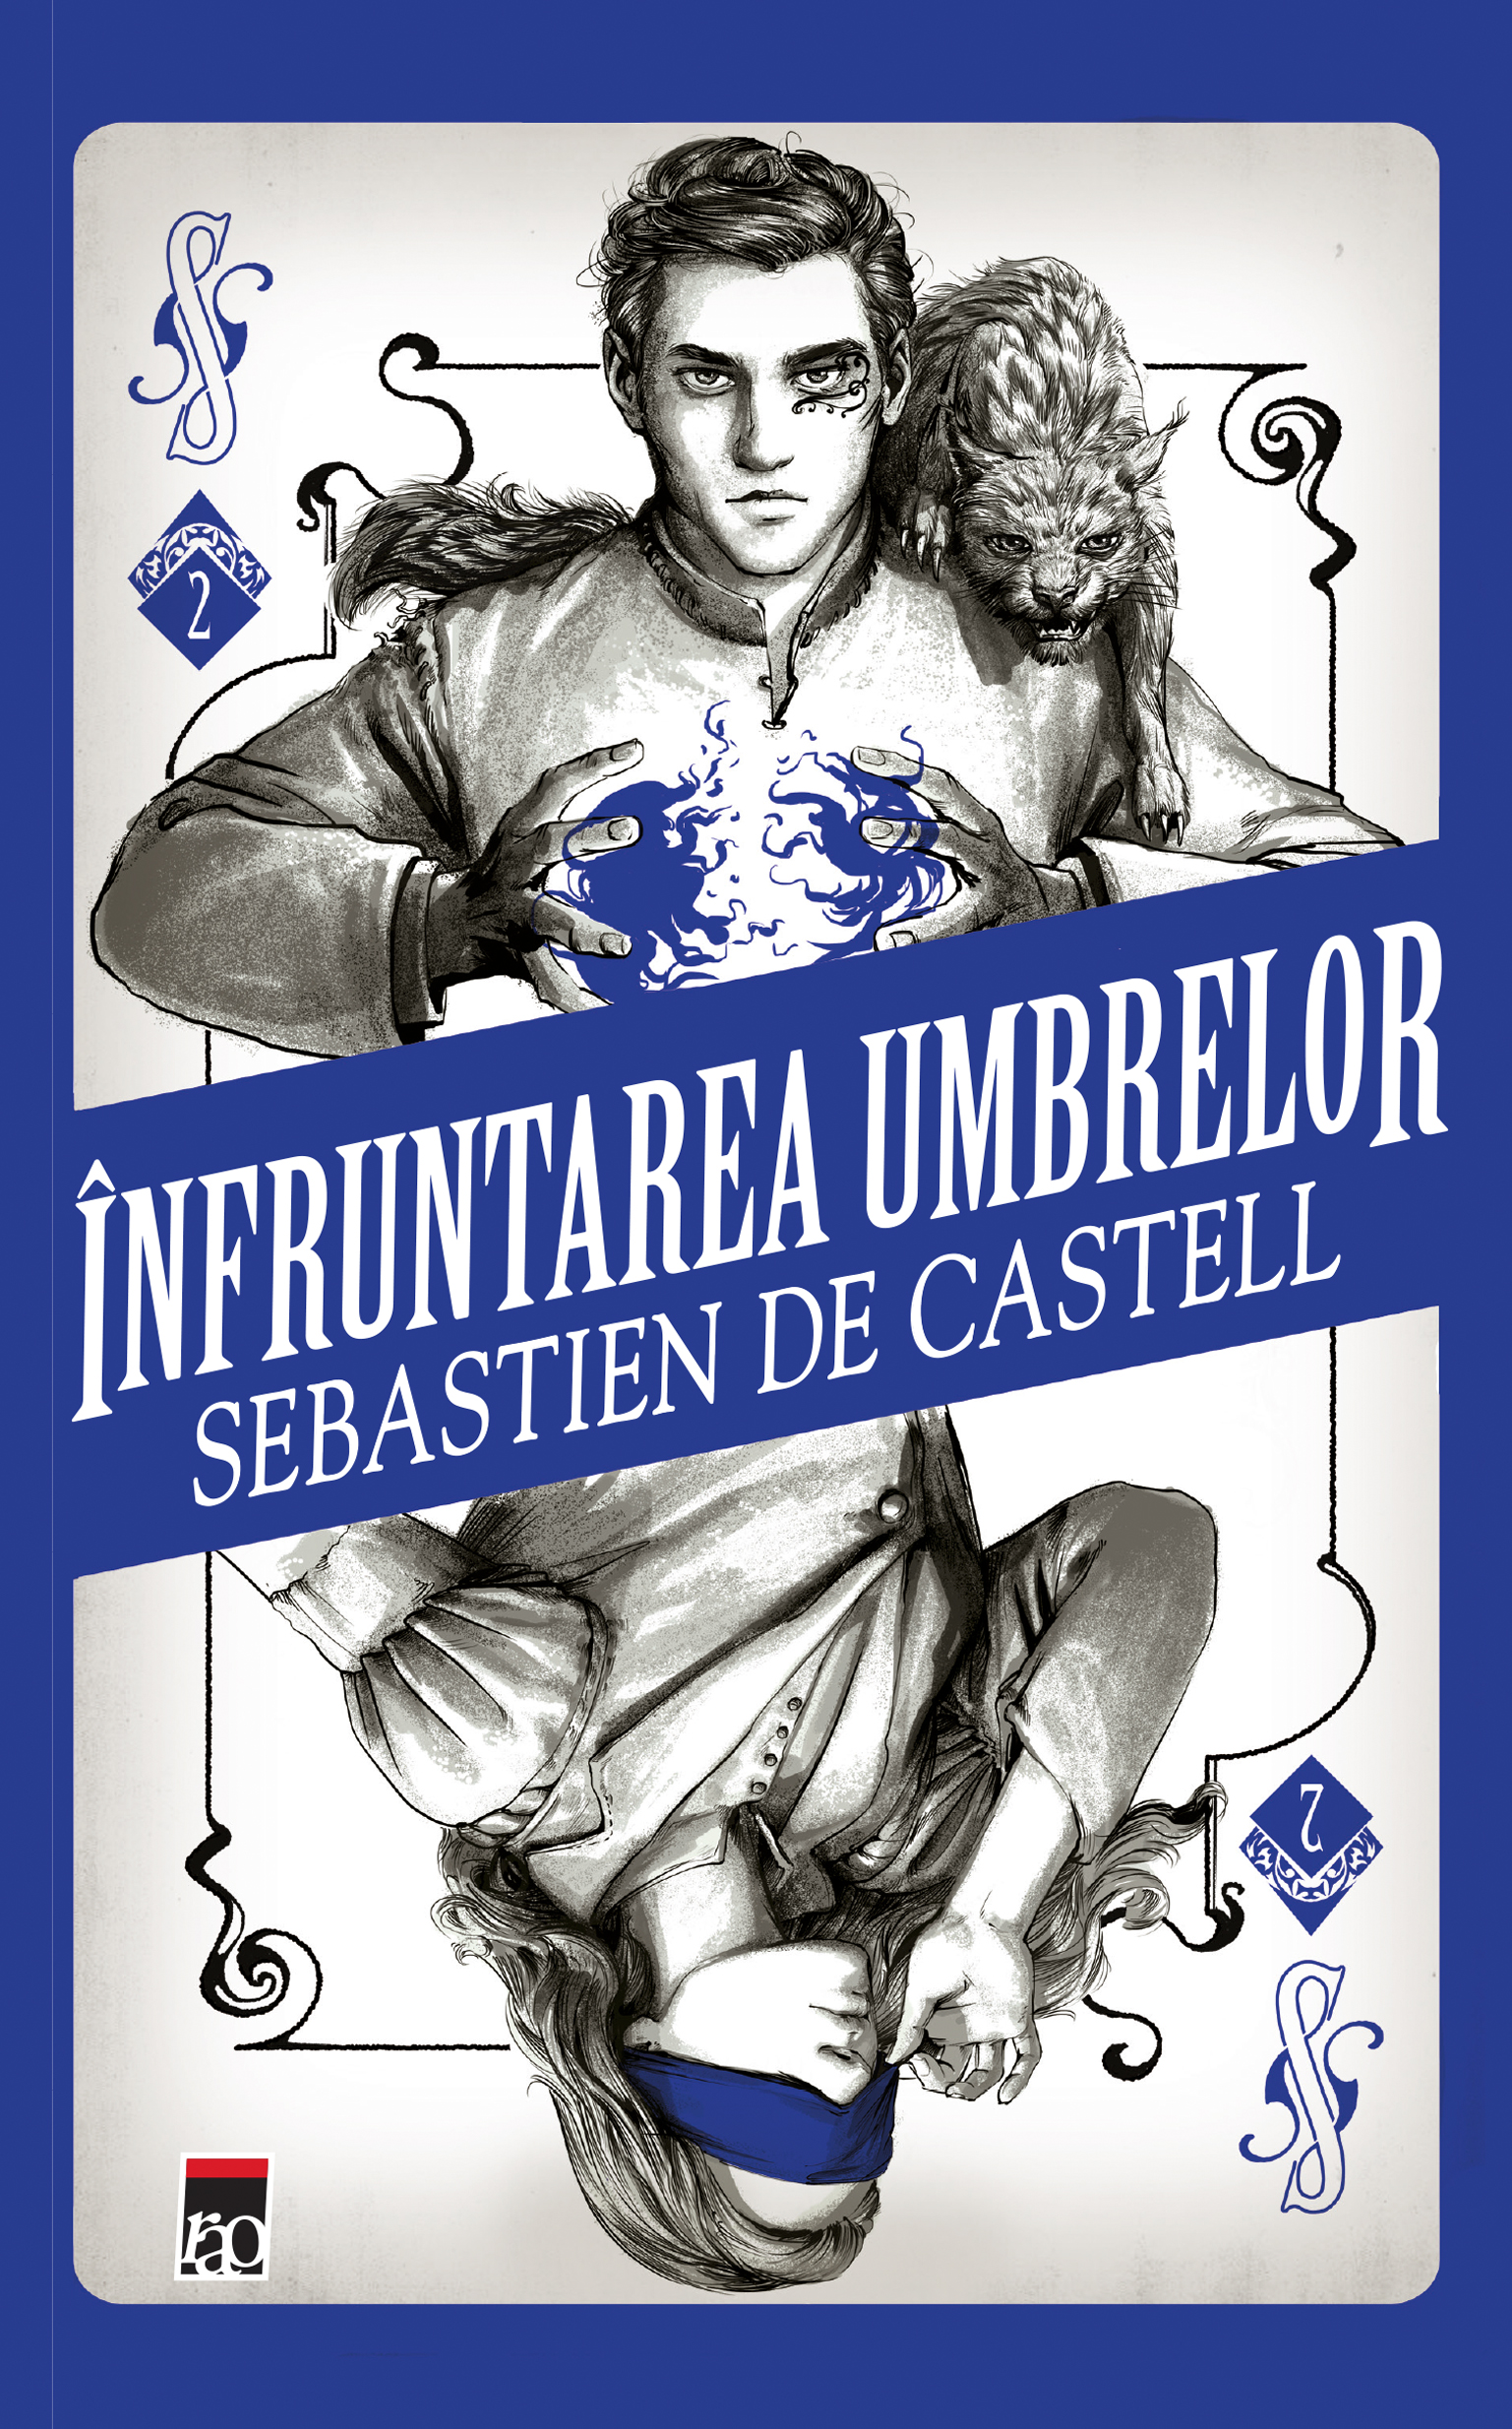 Infruntarea umbrelor - Sebastien de Castell